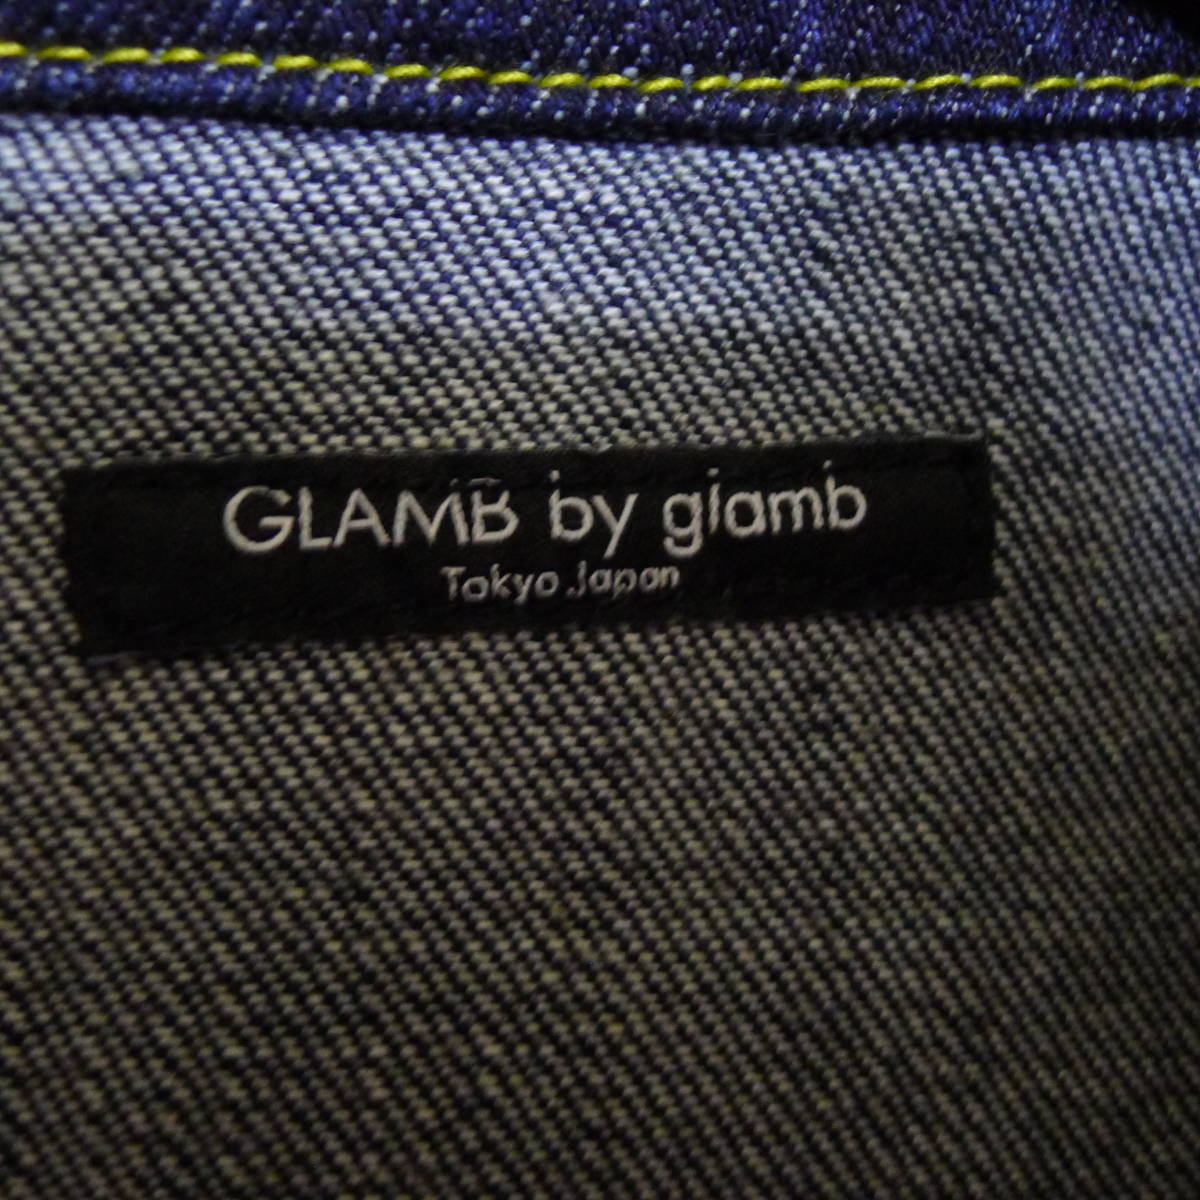 GLAMB by glamb Riders manto Denim Rider's mantle jacket regular price 37,800 jpy 